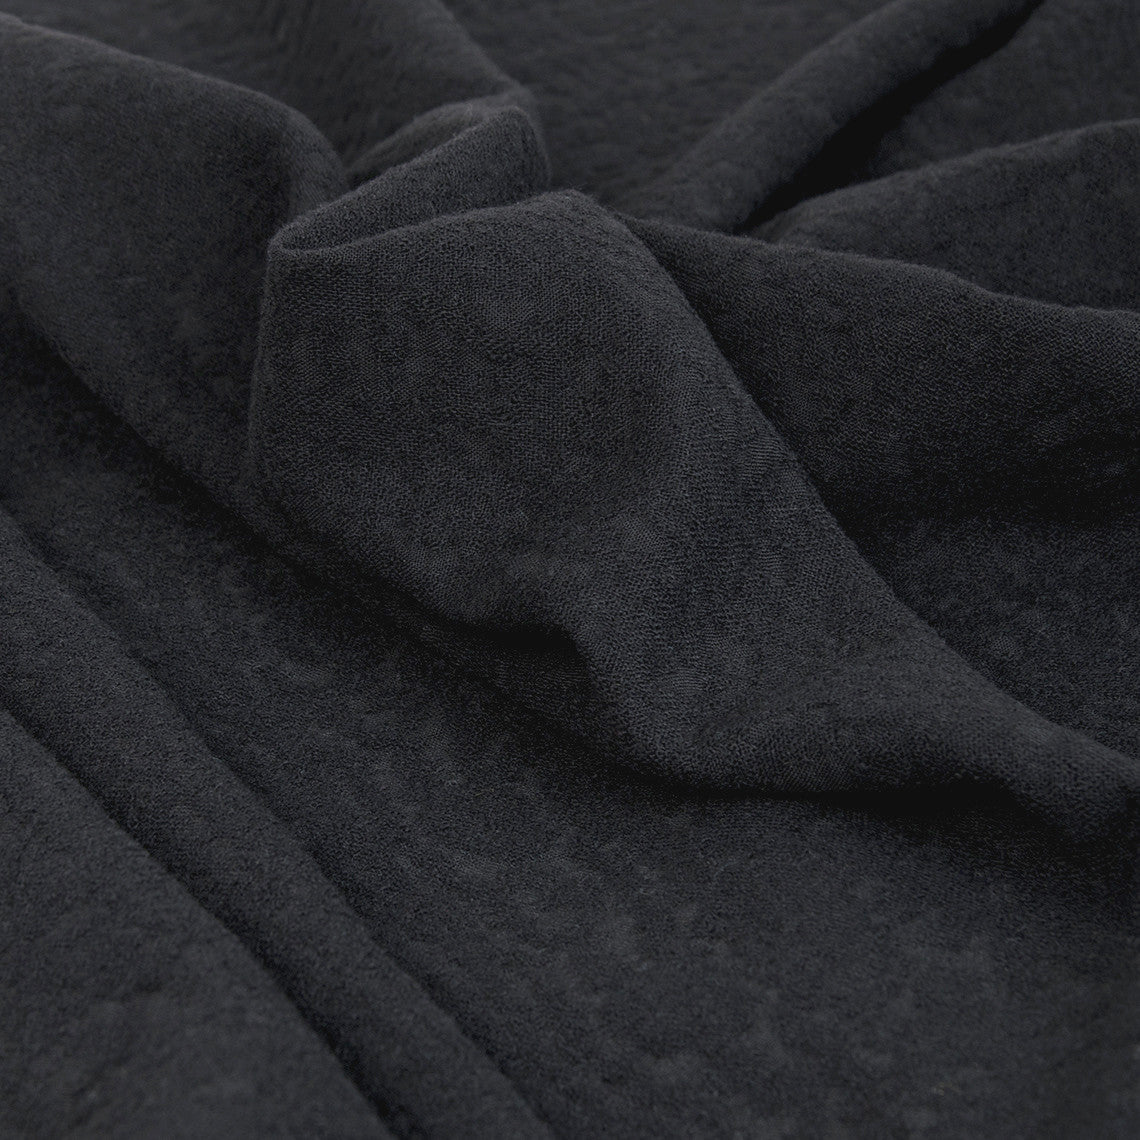 Black Textured Wool Blend 2354 - Fabrics4Fashion